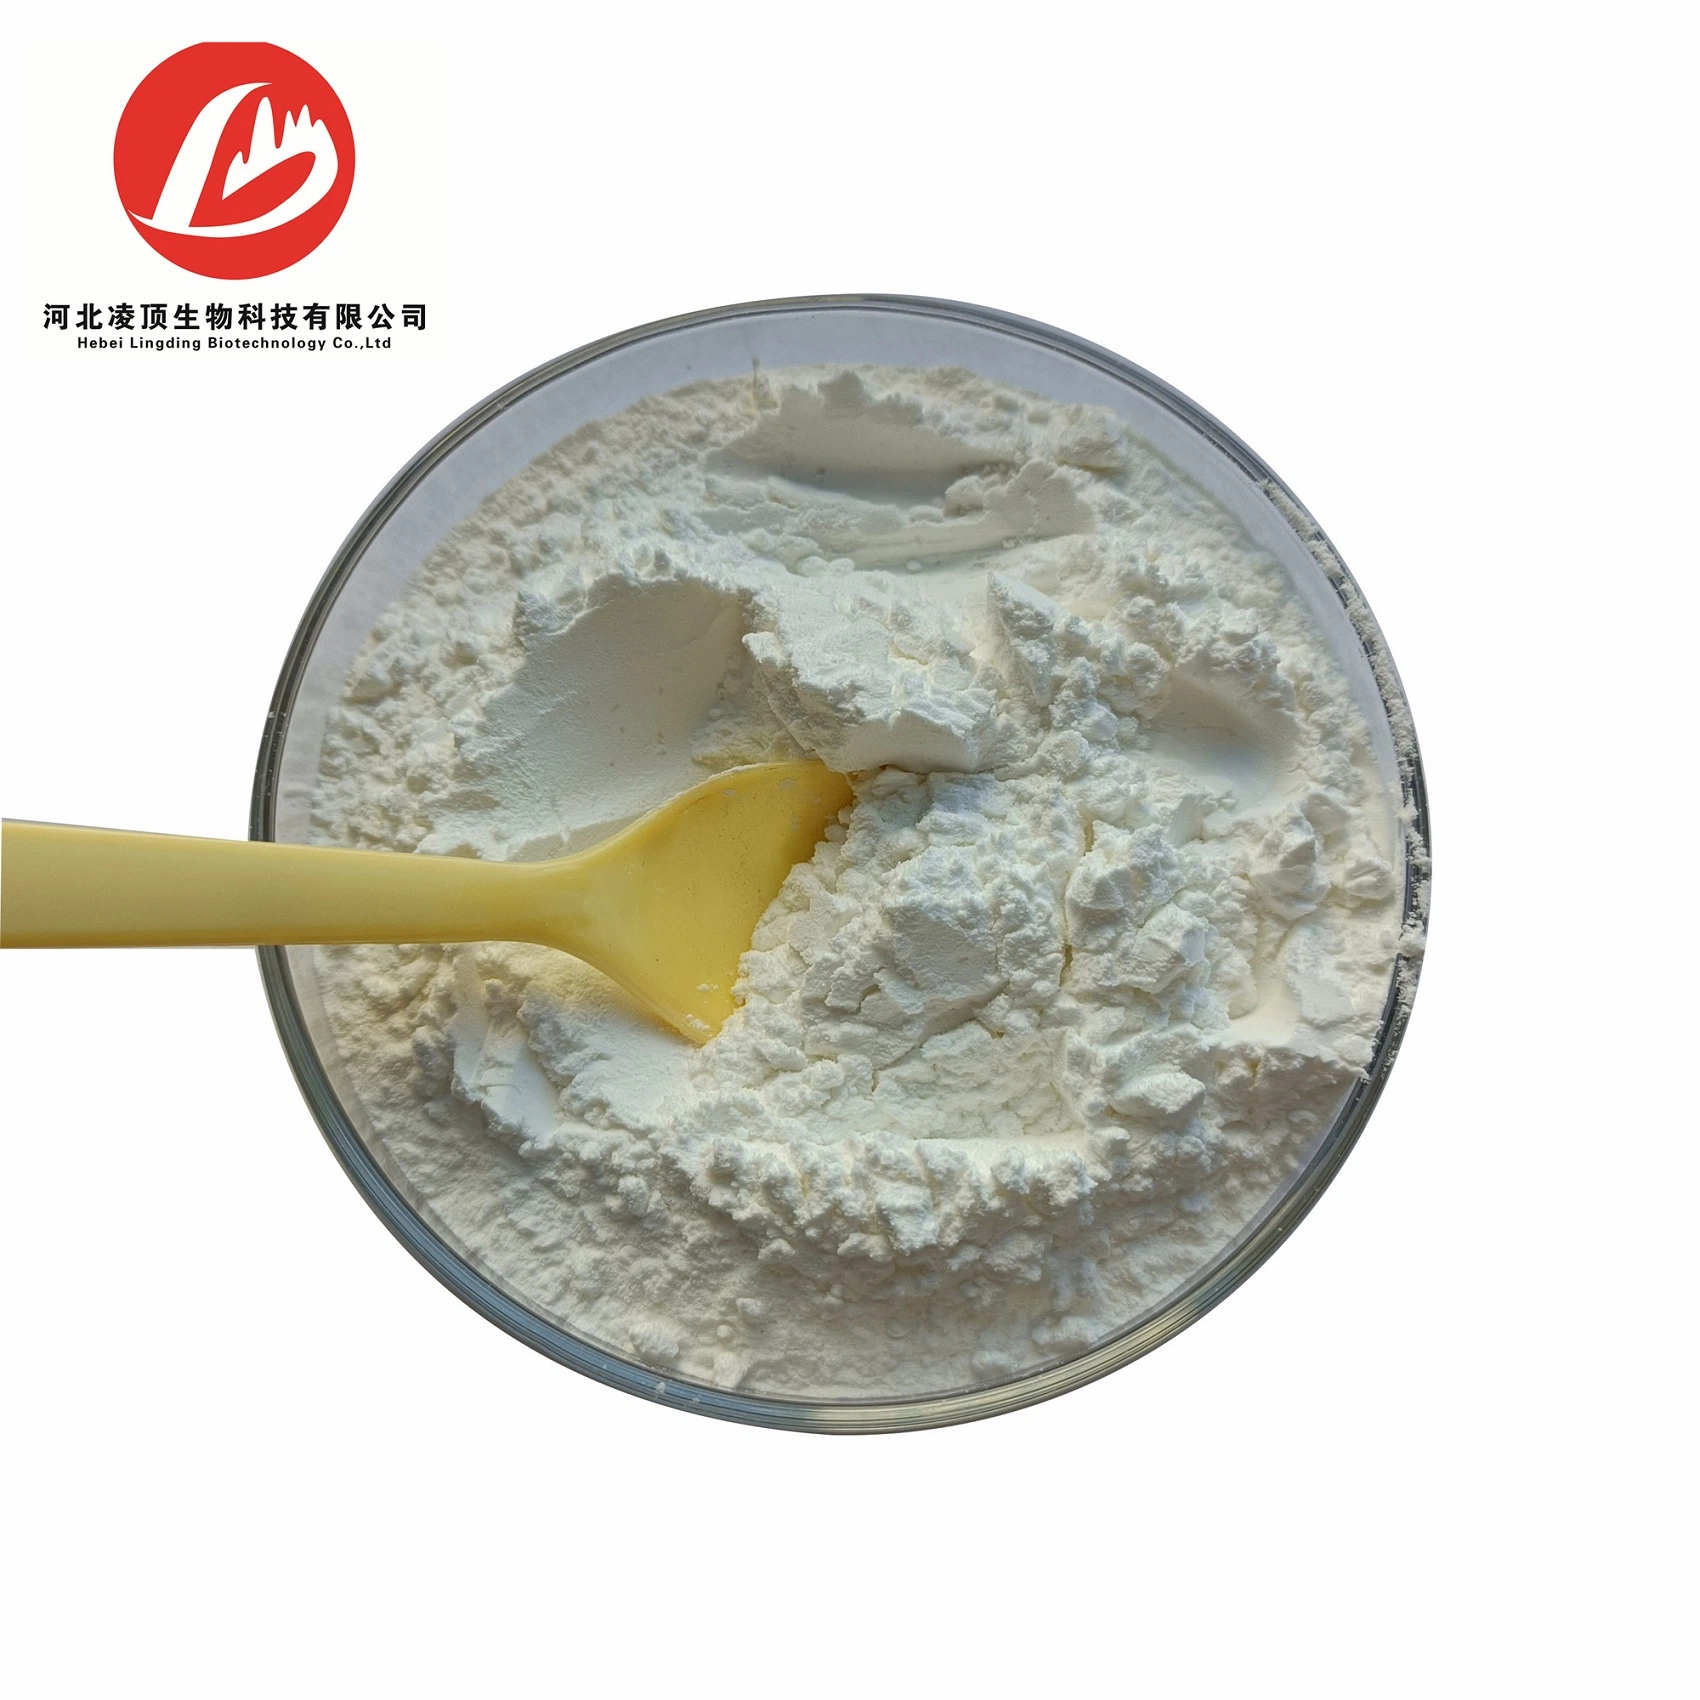 Pramoxine Hydrochloride Powder CAS 637-58-1 with Safe Delivery